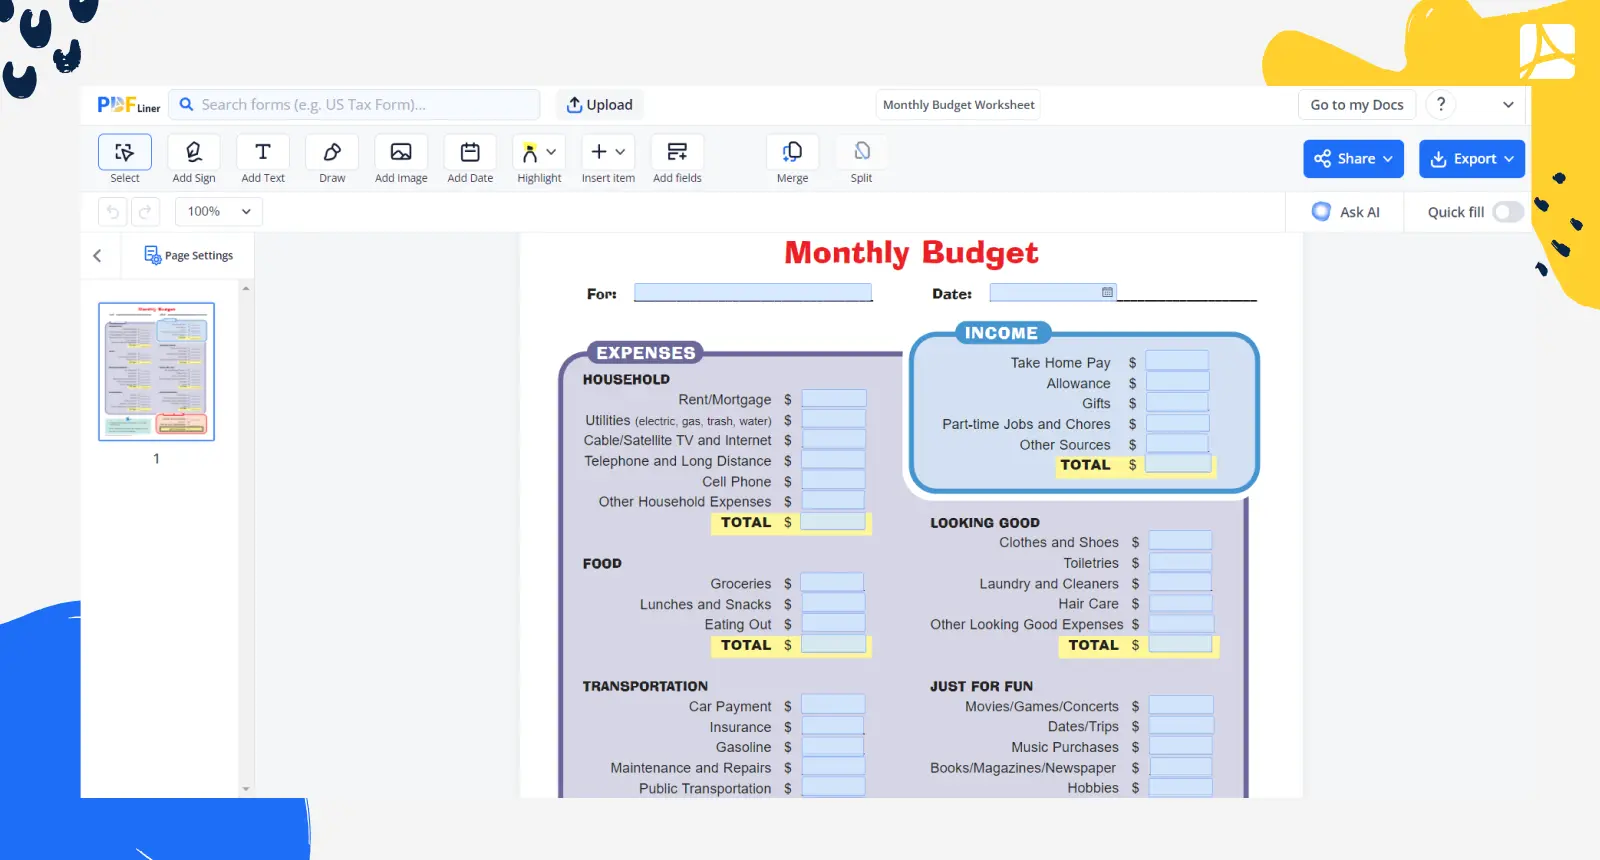 Monthly Budget Worksheet Screenshot